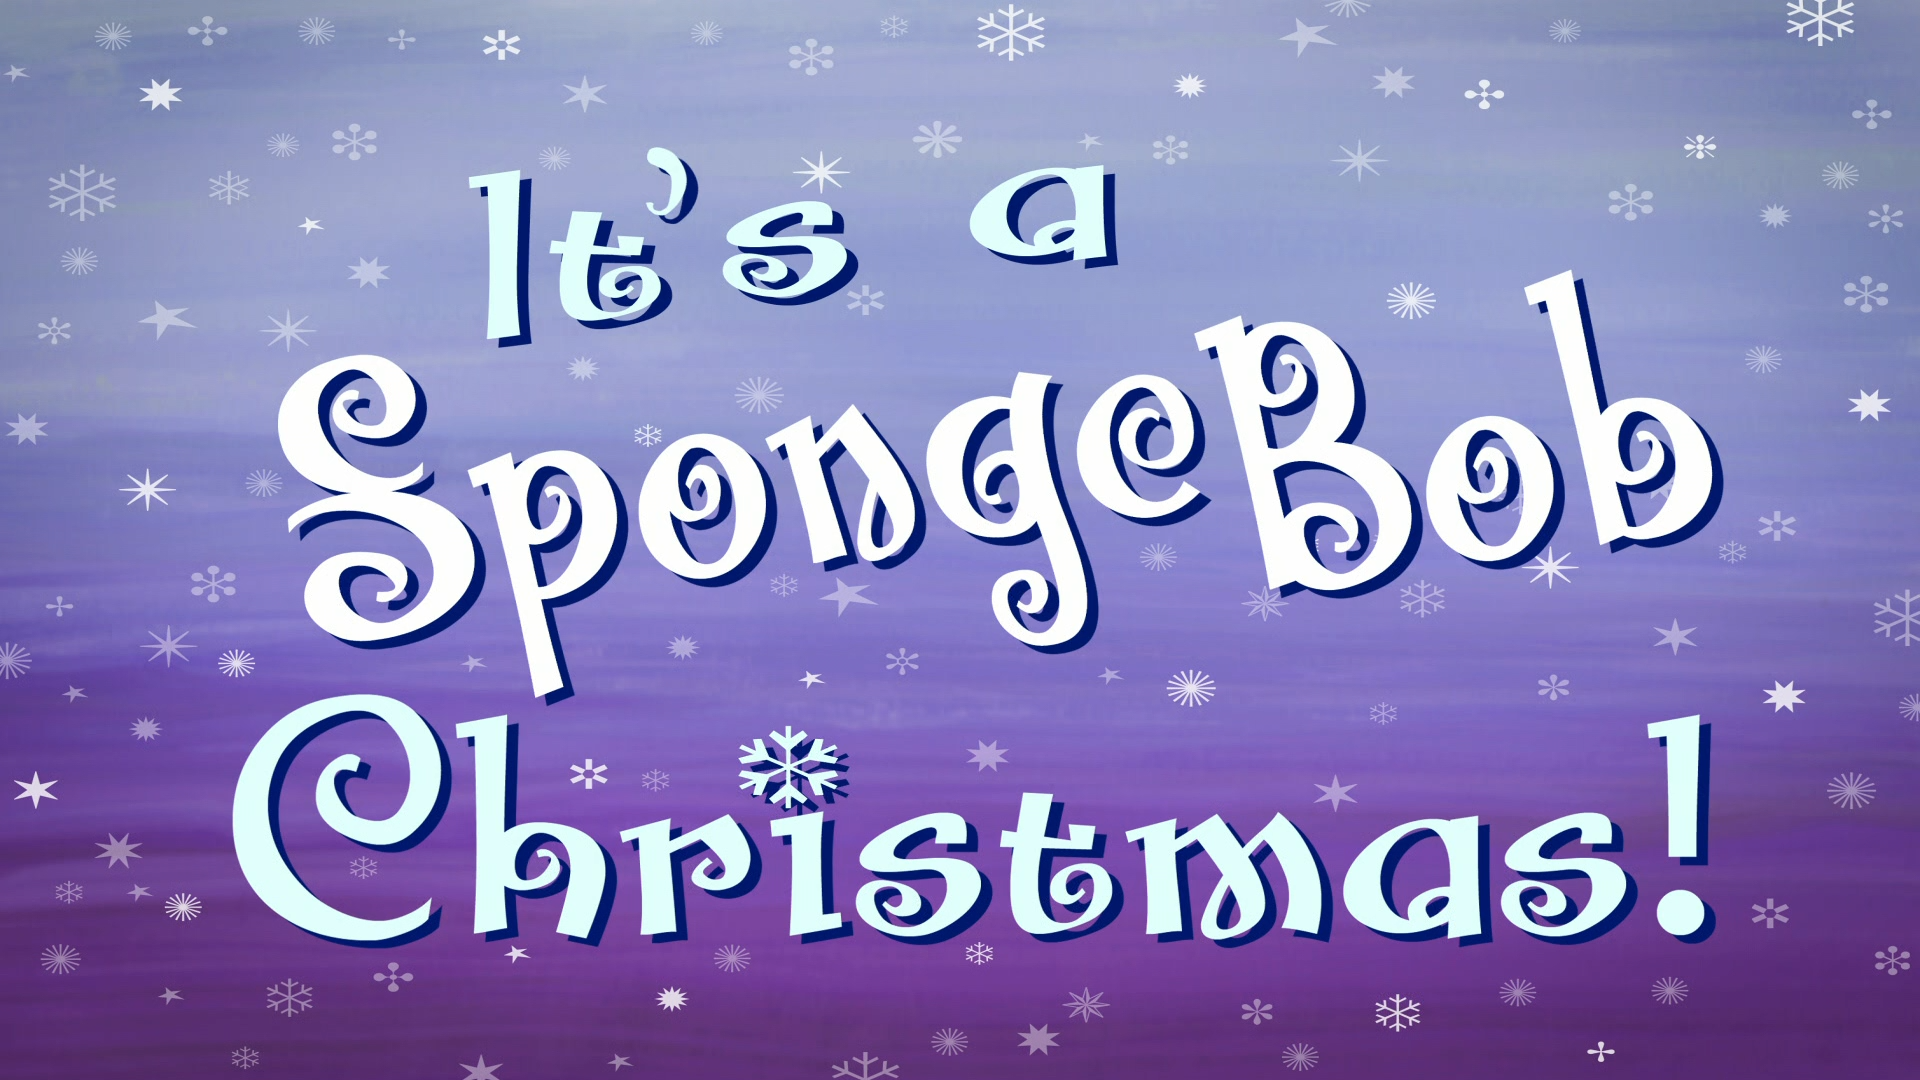 https://static.wikia.nocookie.net/spongebob/images/d/df/It%27s_a_SpongeBob_Christmas%21_title_card.png/revision/latest?cb=20230403061429